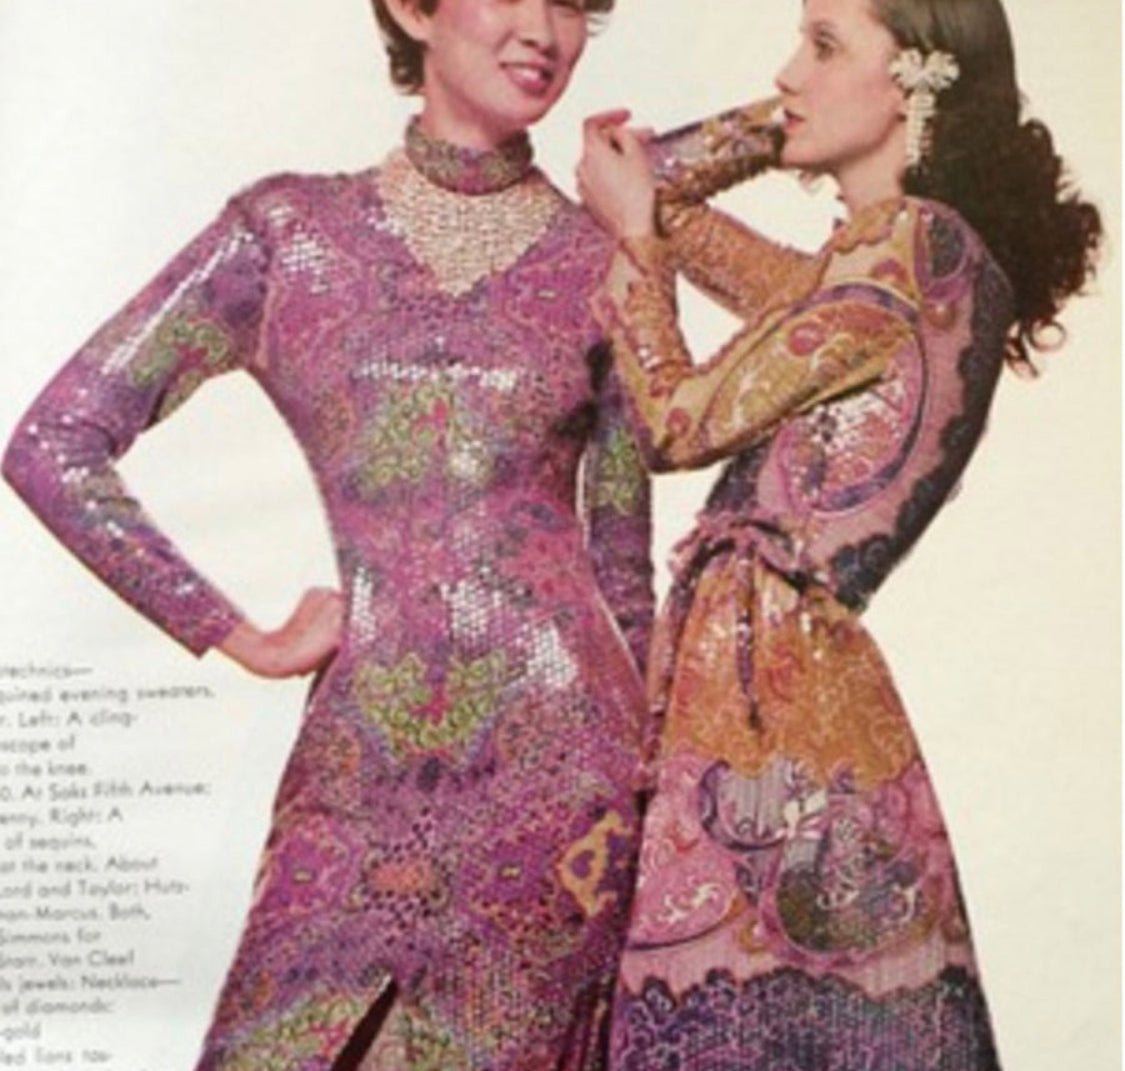 Maxi slit dress by Malcolm Starr for Creeds vintage advertisement @recessla